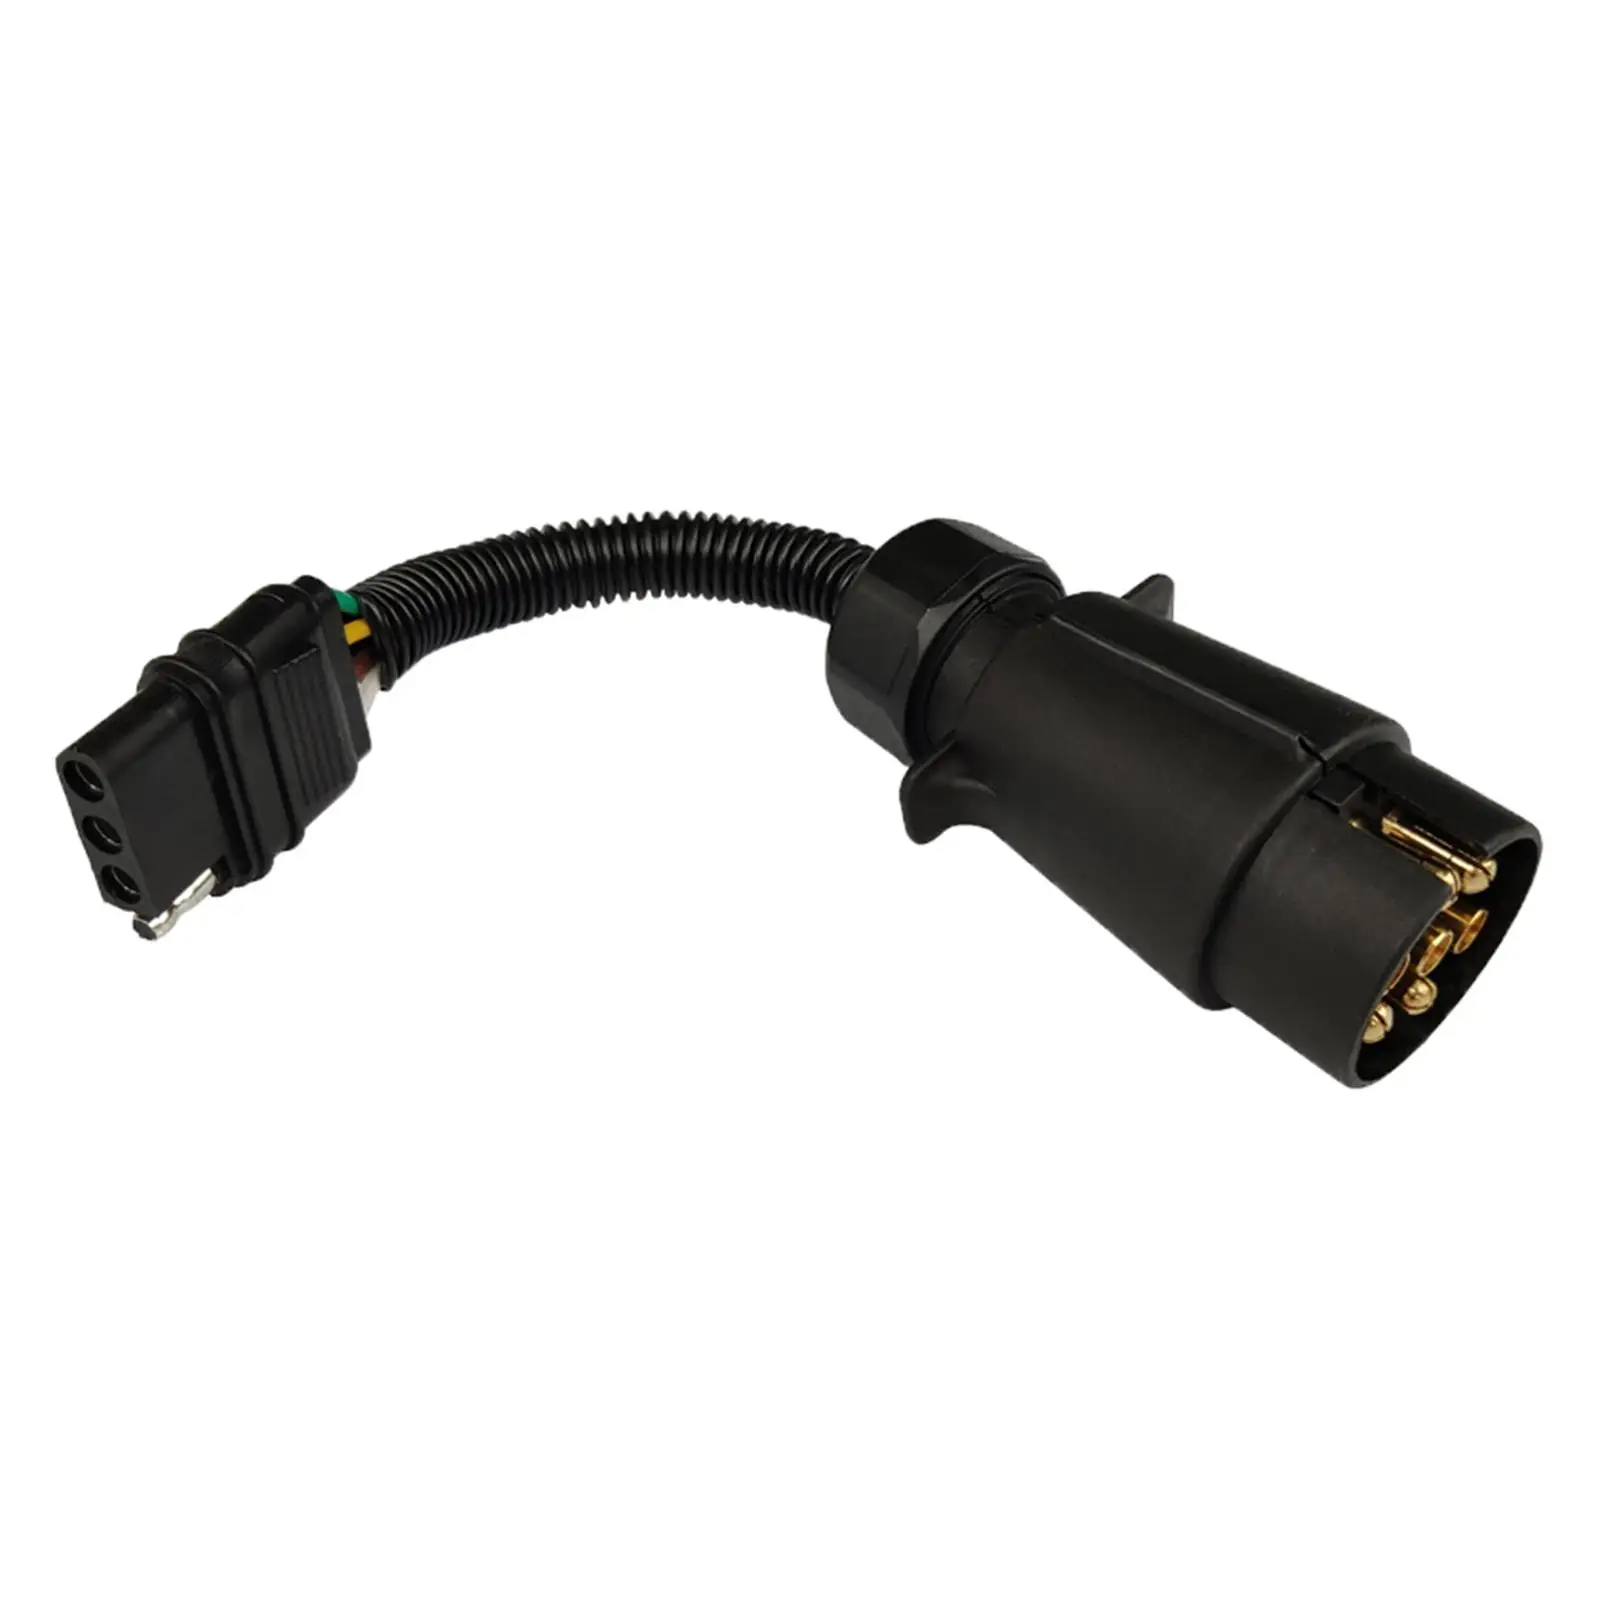 Trailer Conversion Plug Socket 7Pin European Round Plug to 4Pin American Flat Socket for Rvs